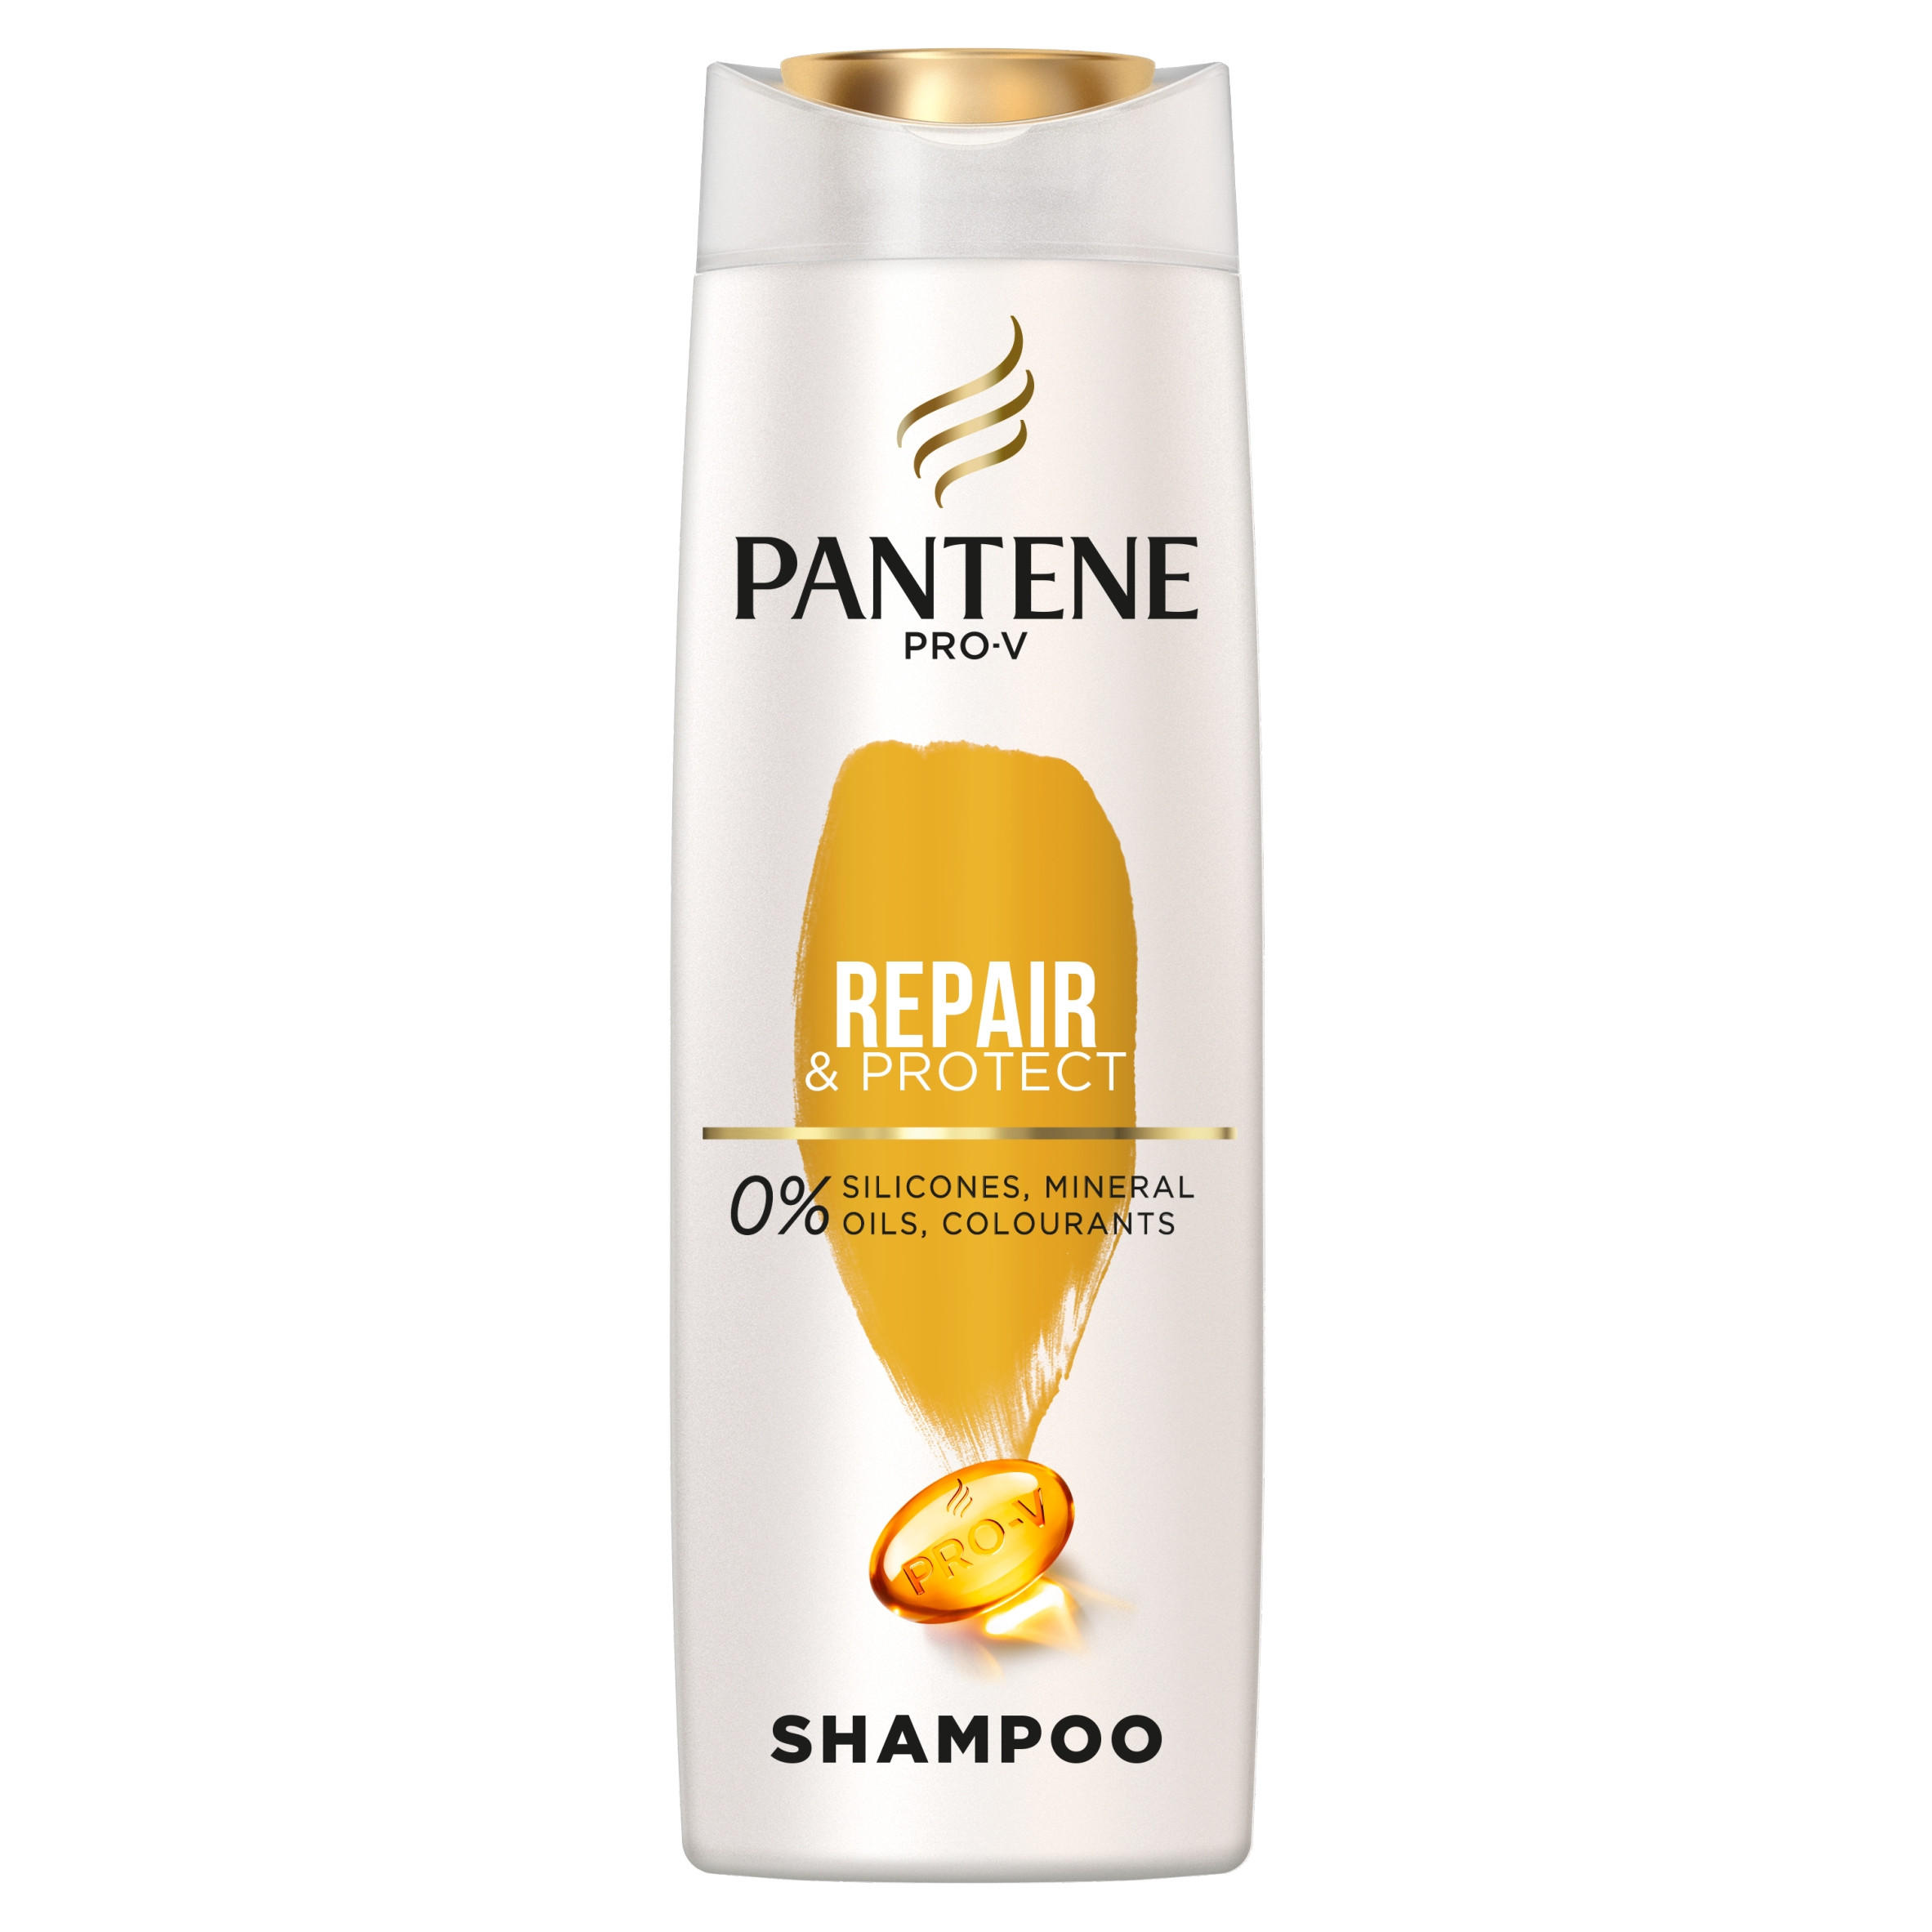 Pantene    Pro-V Repair & Protect Shampoo, For Damaged Hair, 360ml